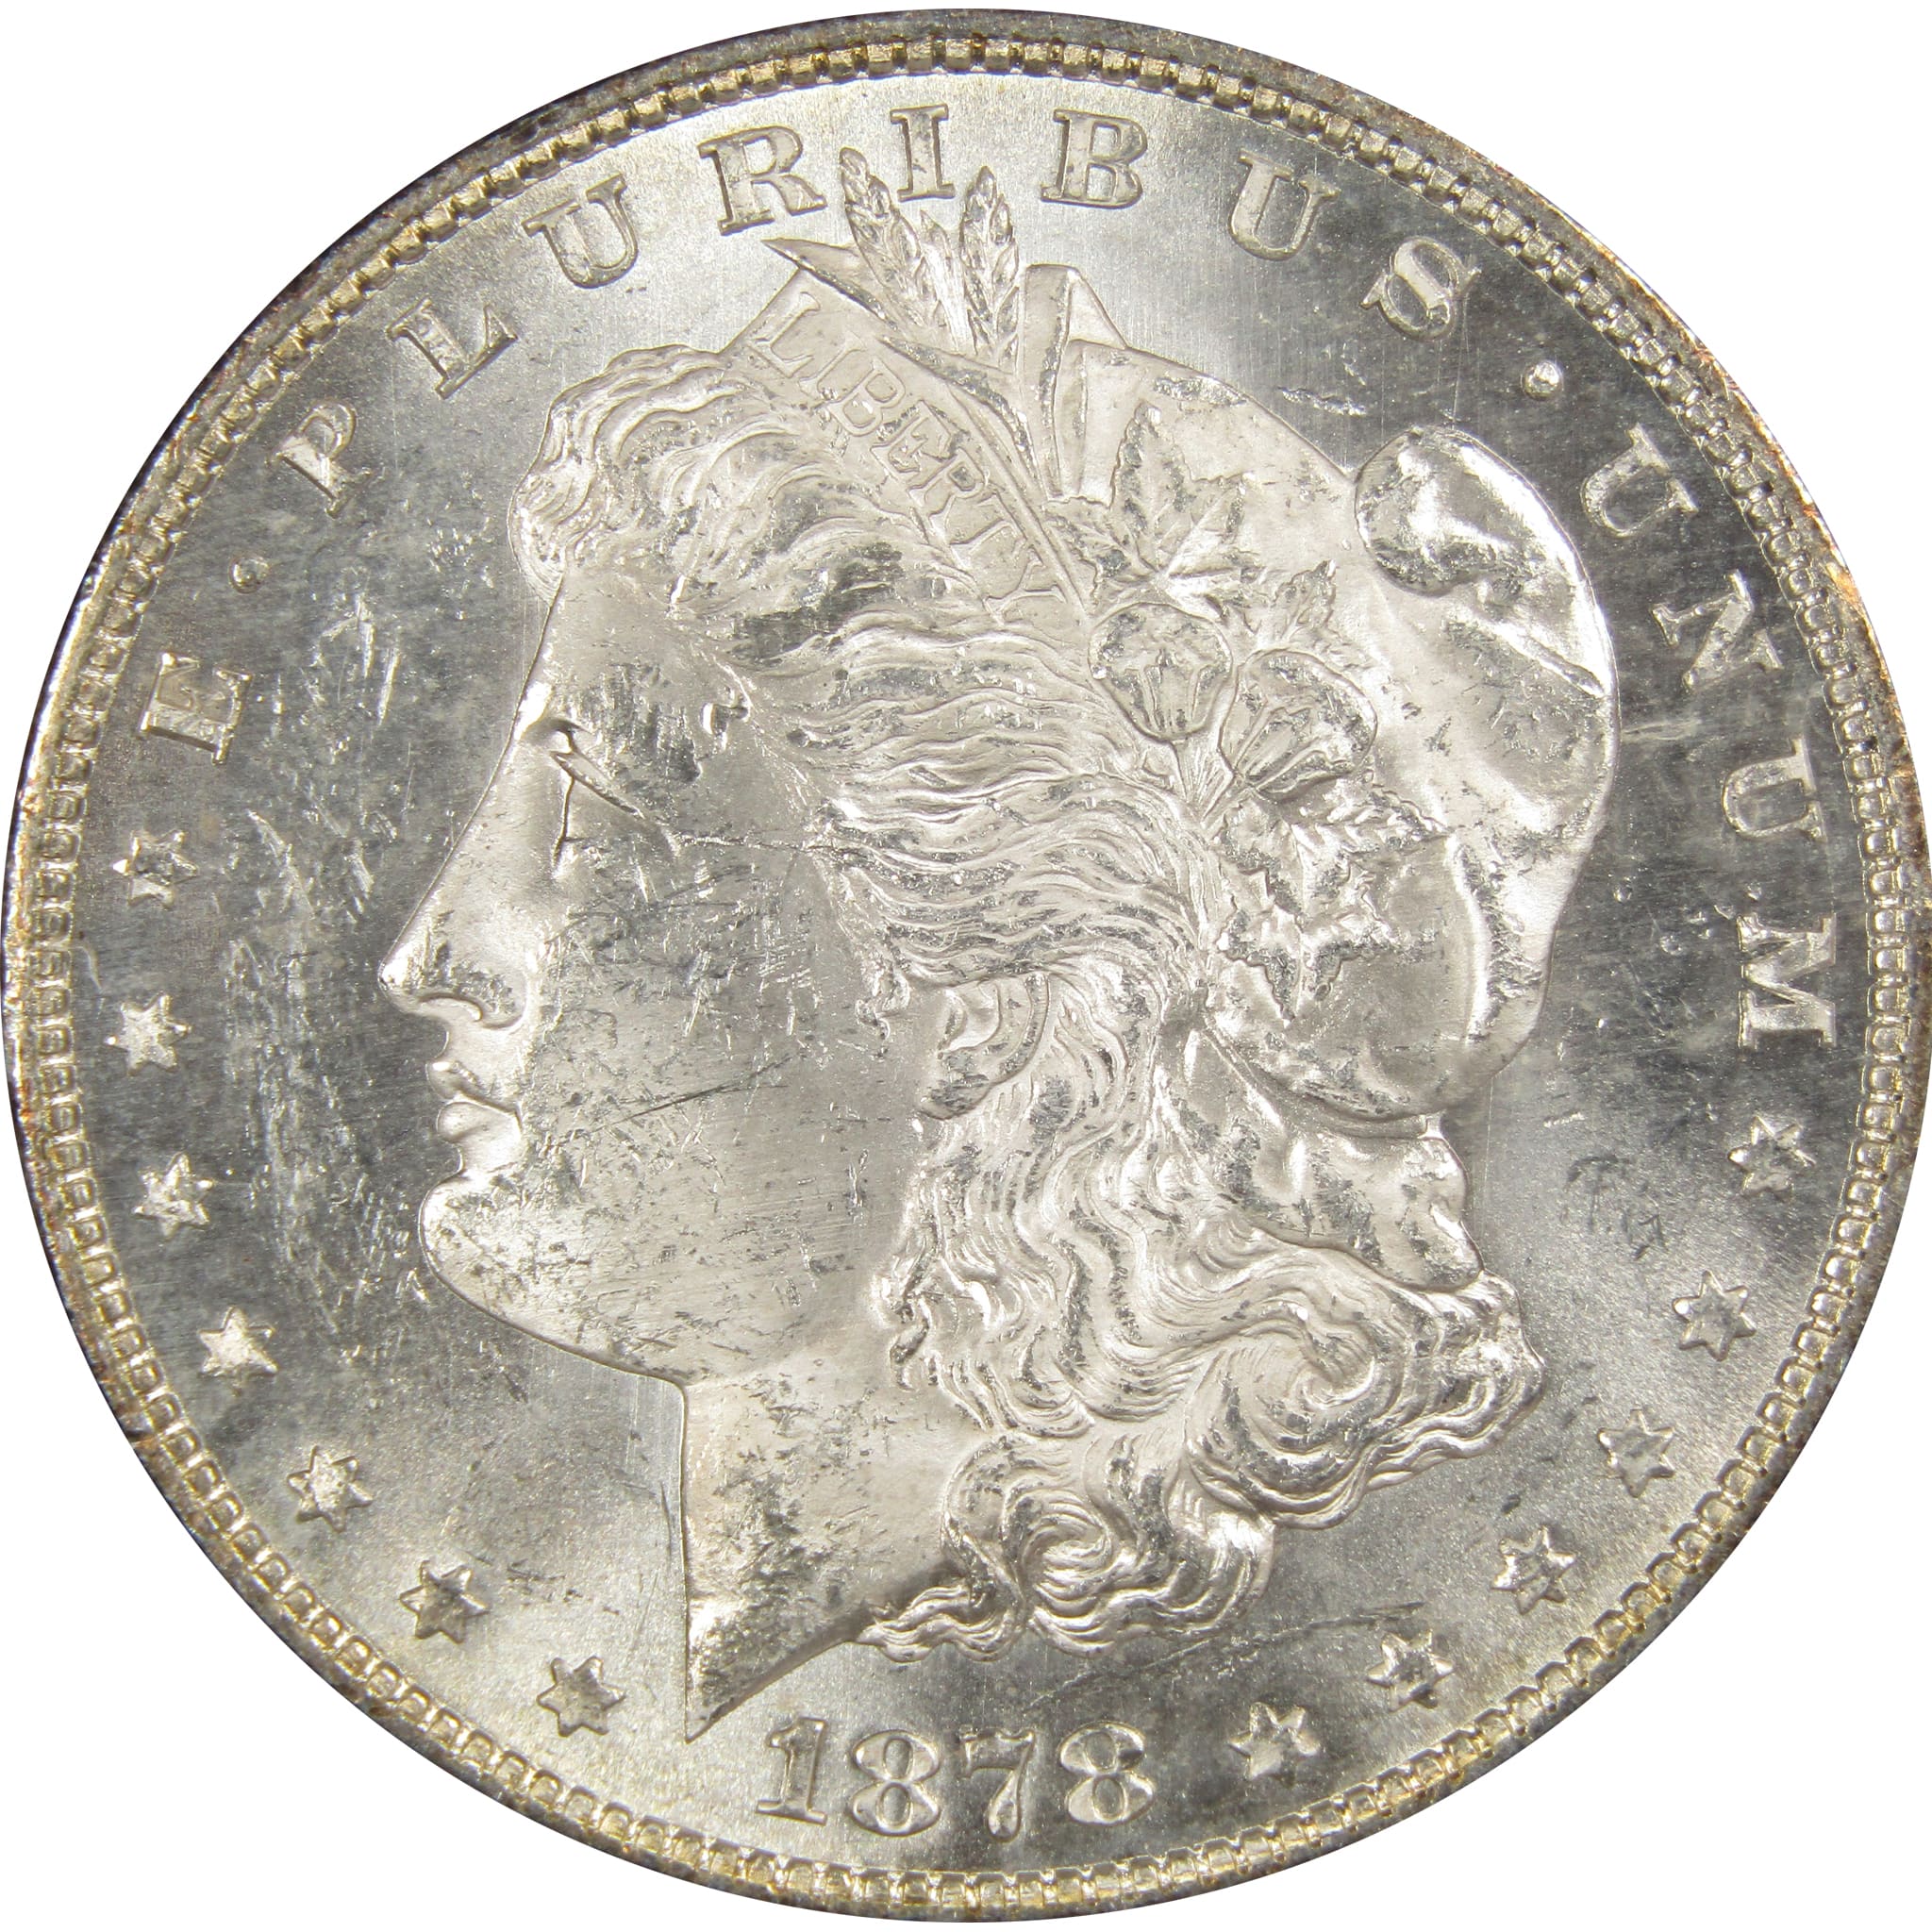 1878 S Morgan Dollar BU Uncirculated Mint State 90% Silver SKU:IPC7495 - Morgan coin - Morgan silver dollar - Morgan silver dollar for sale - Profile Coins &amp; Collectibles